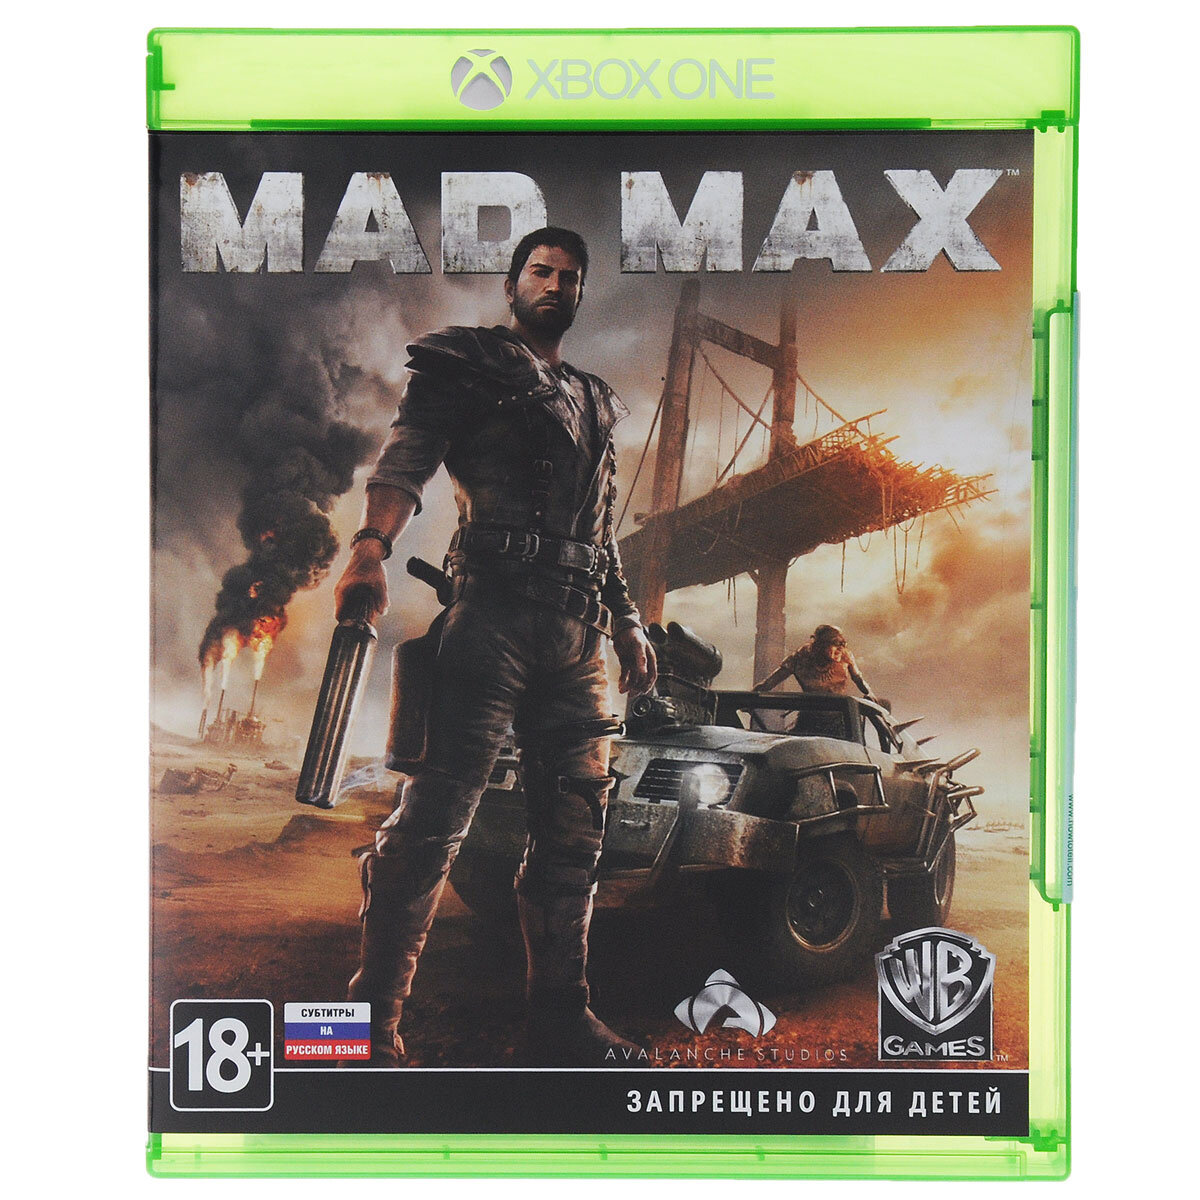 Игра Mad Max Standard Edition для Xbox One/Series X|S Русский язык электронный ключ (Аргентина)